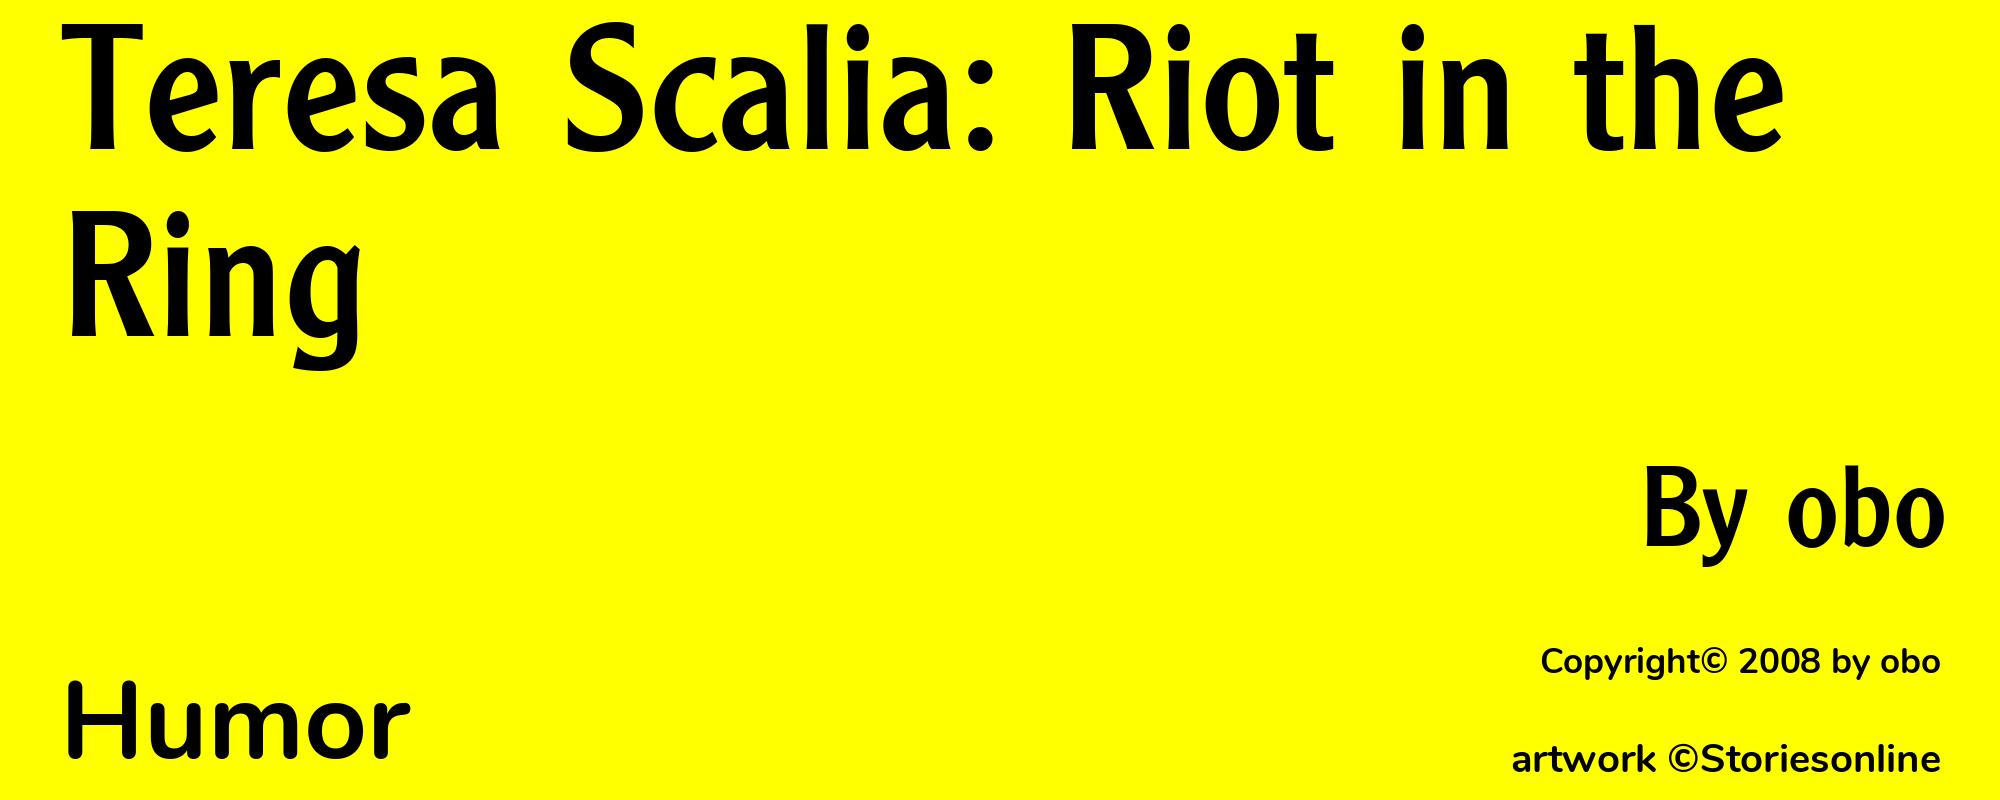 Teresa Scalia: Riot in the Ring - Cover